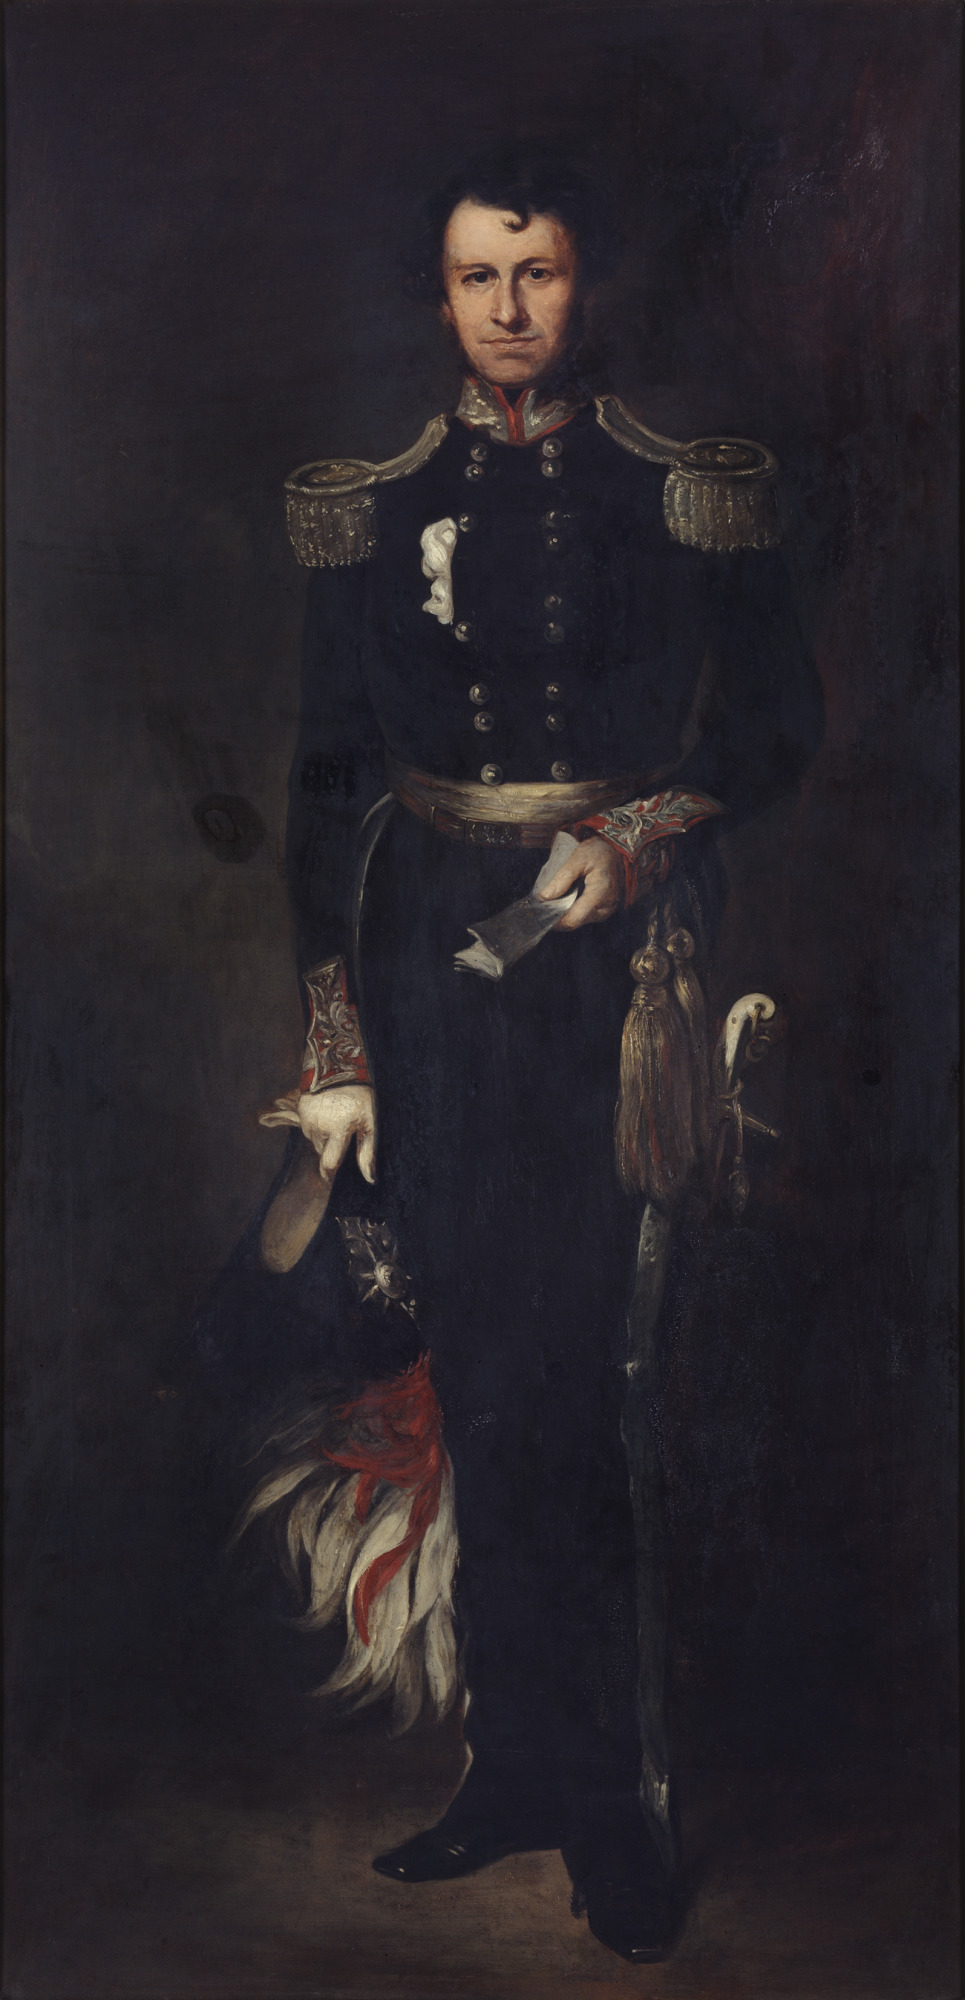 Charles La Trobe, by Sir Francis Grant, 1855.